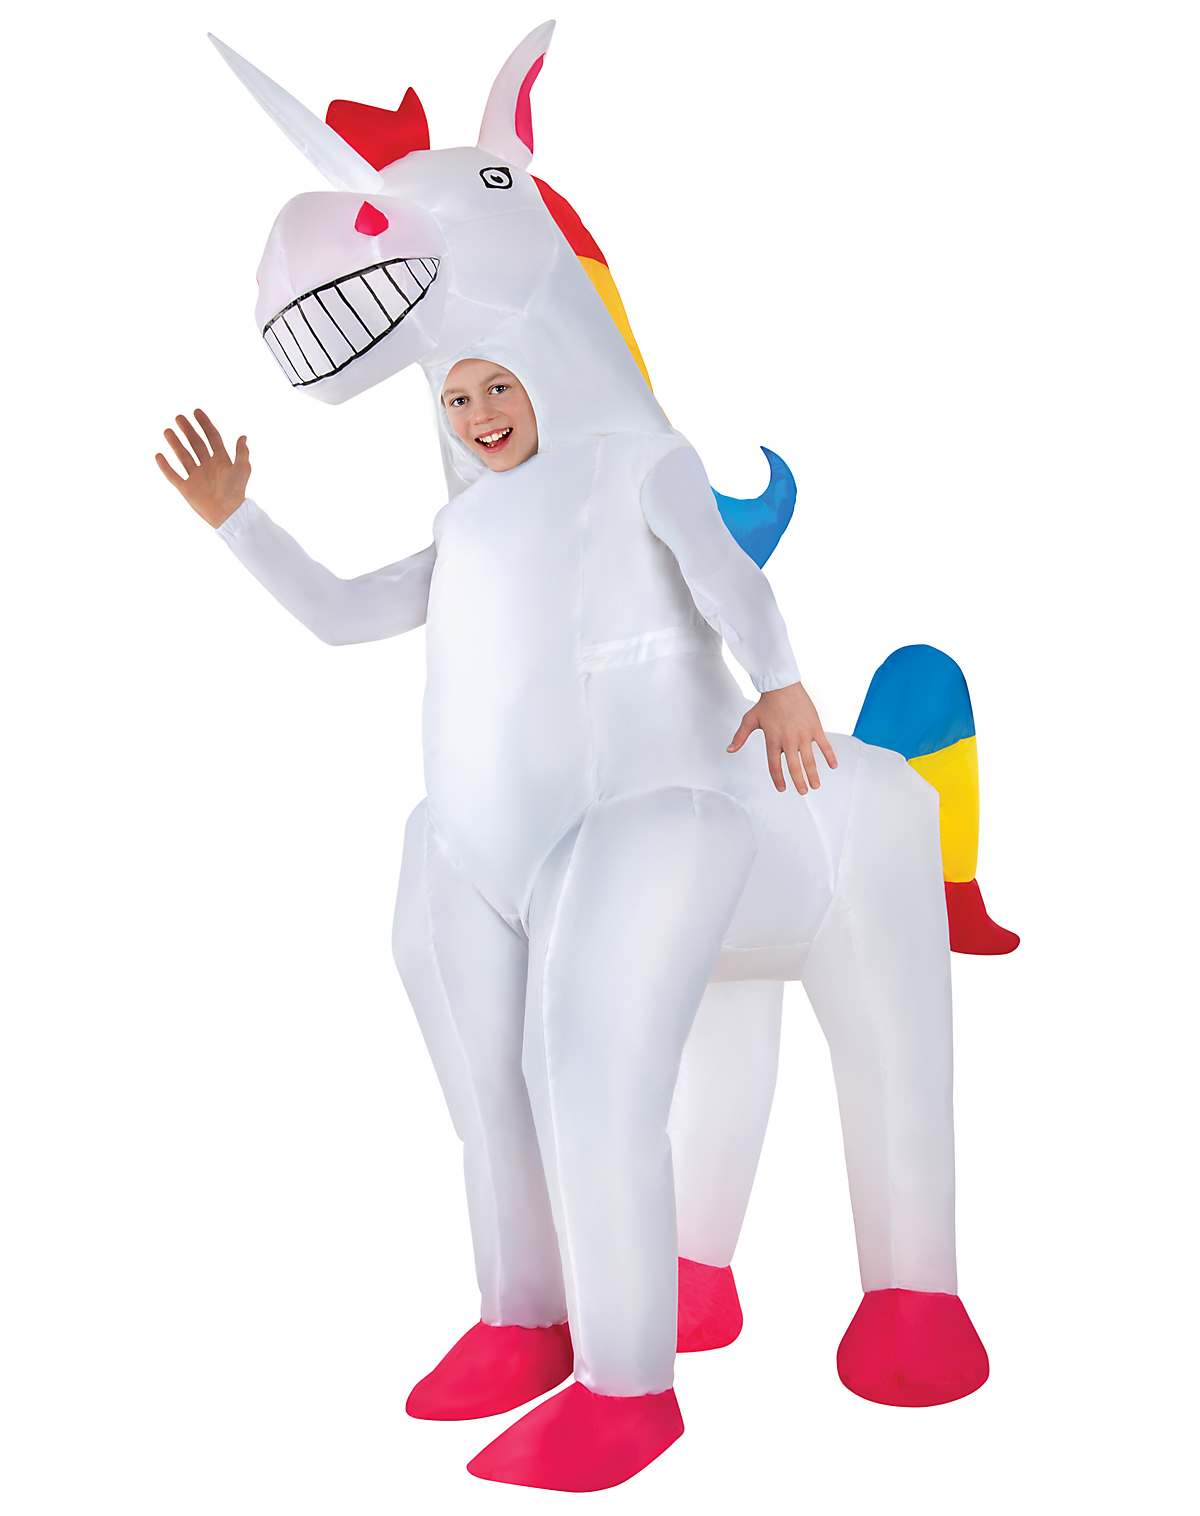 Kids Inflatable Unicorn Costume